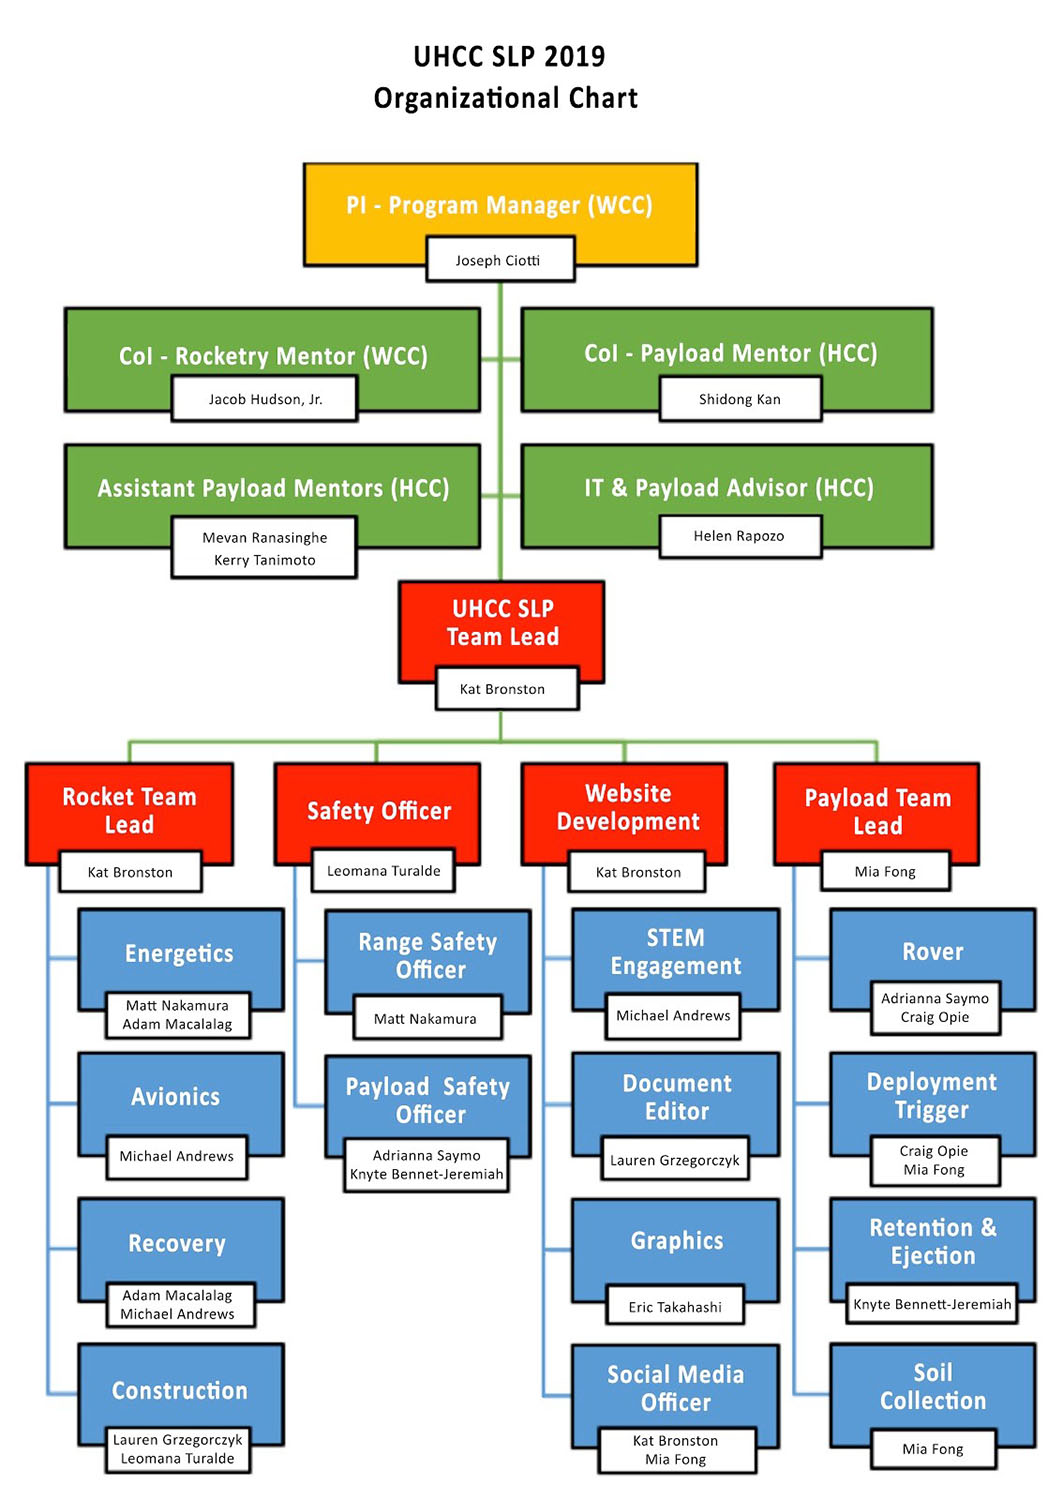 UHCC SLP 2019 Organizational Chart